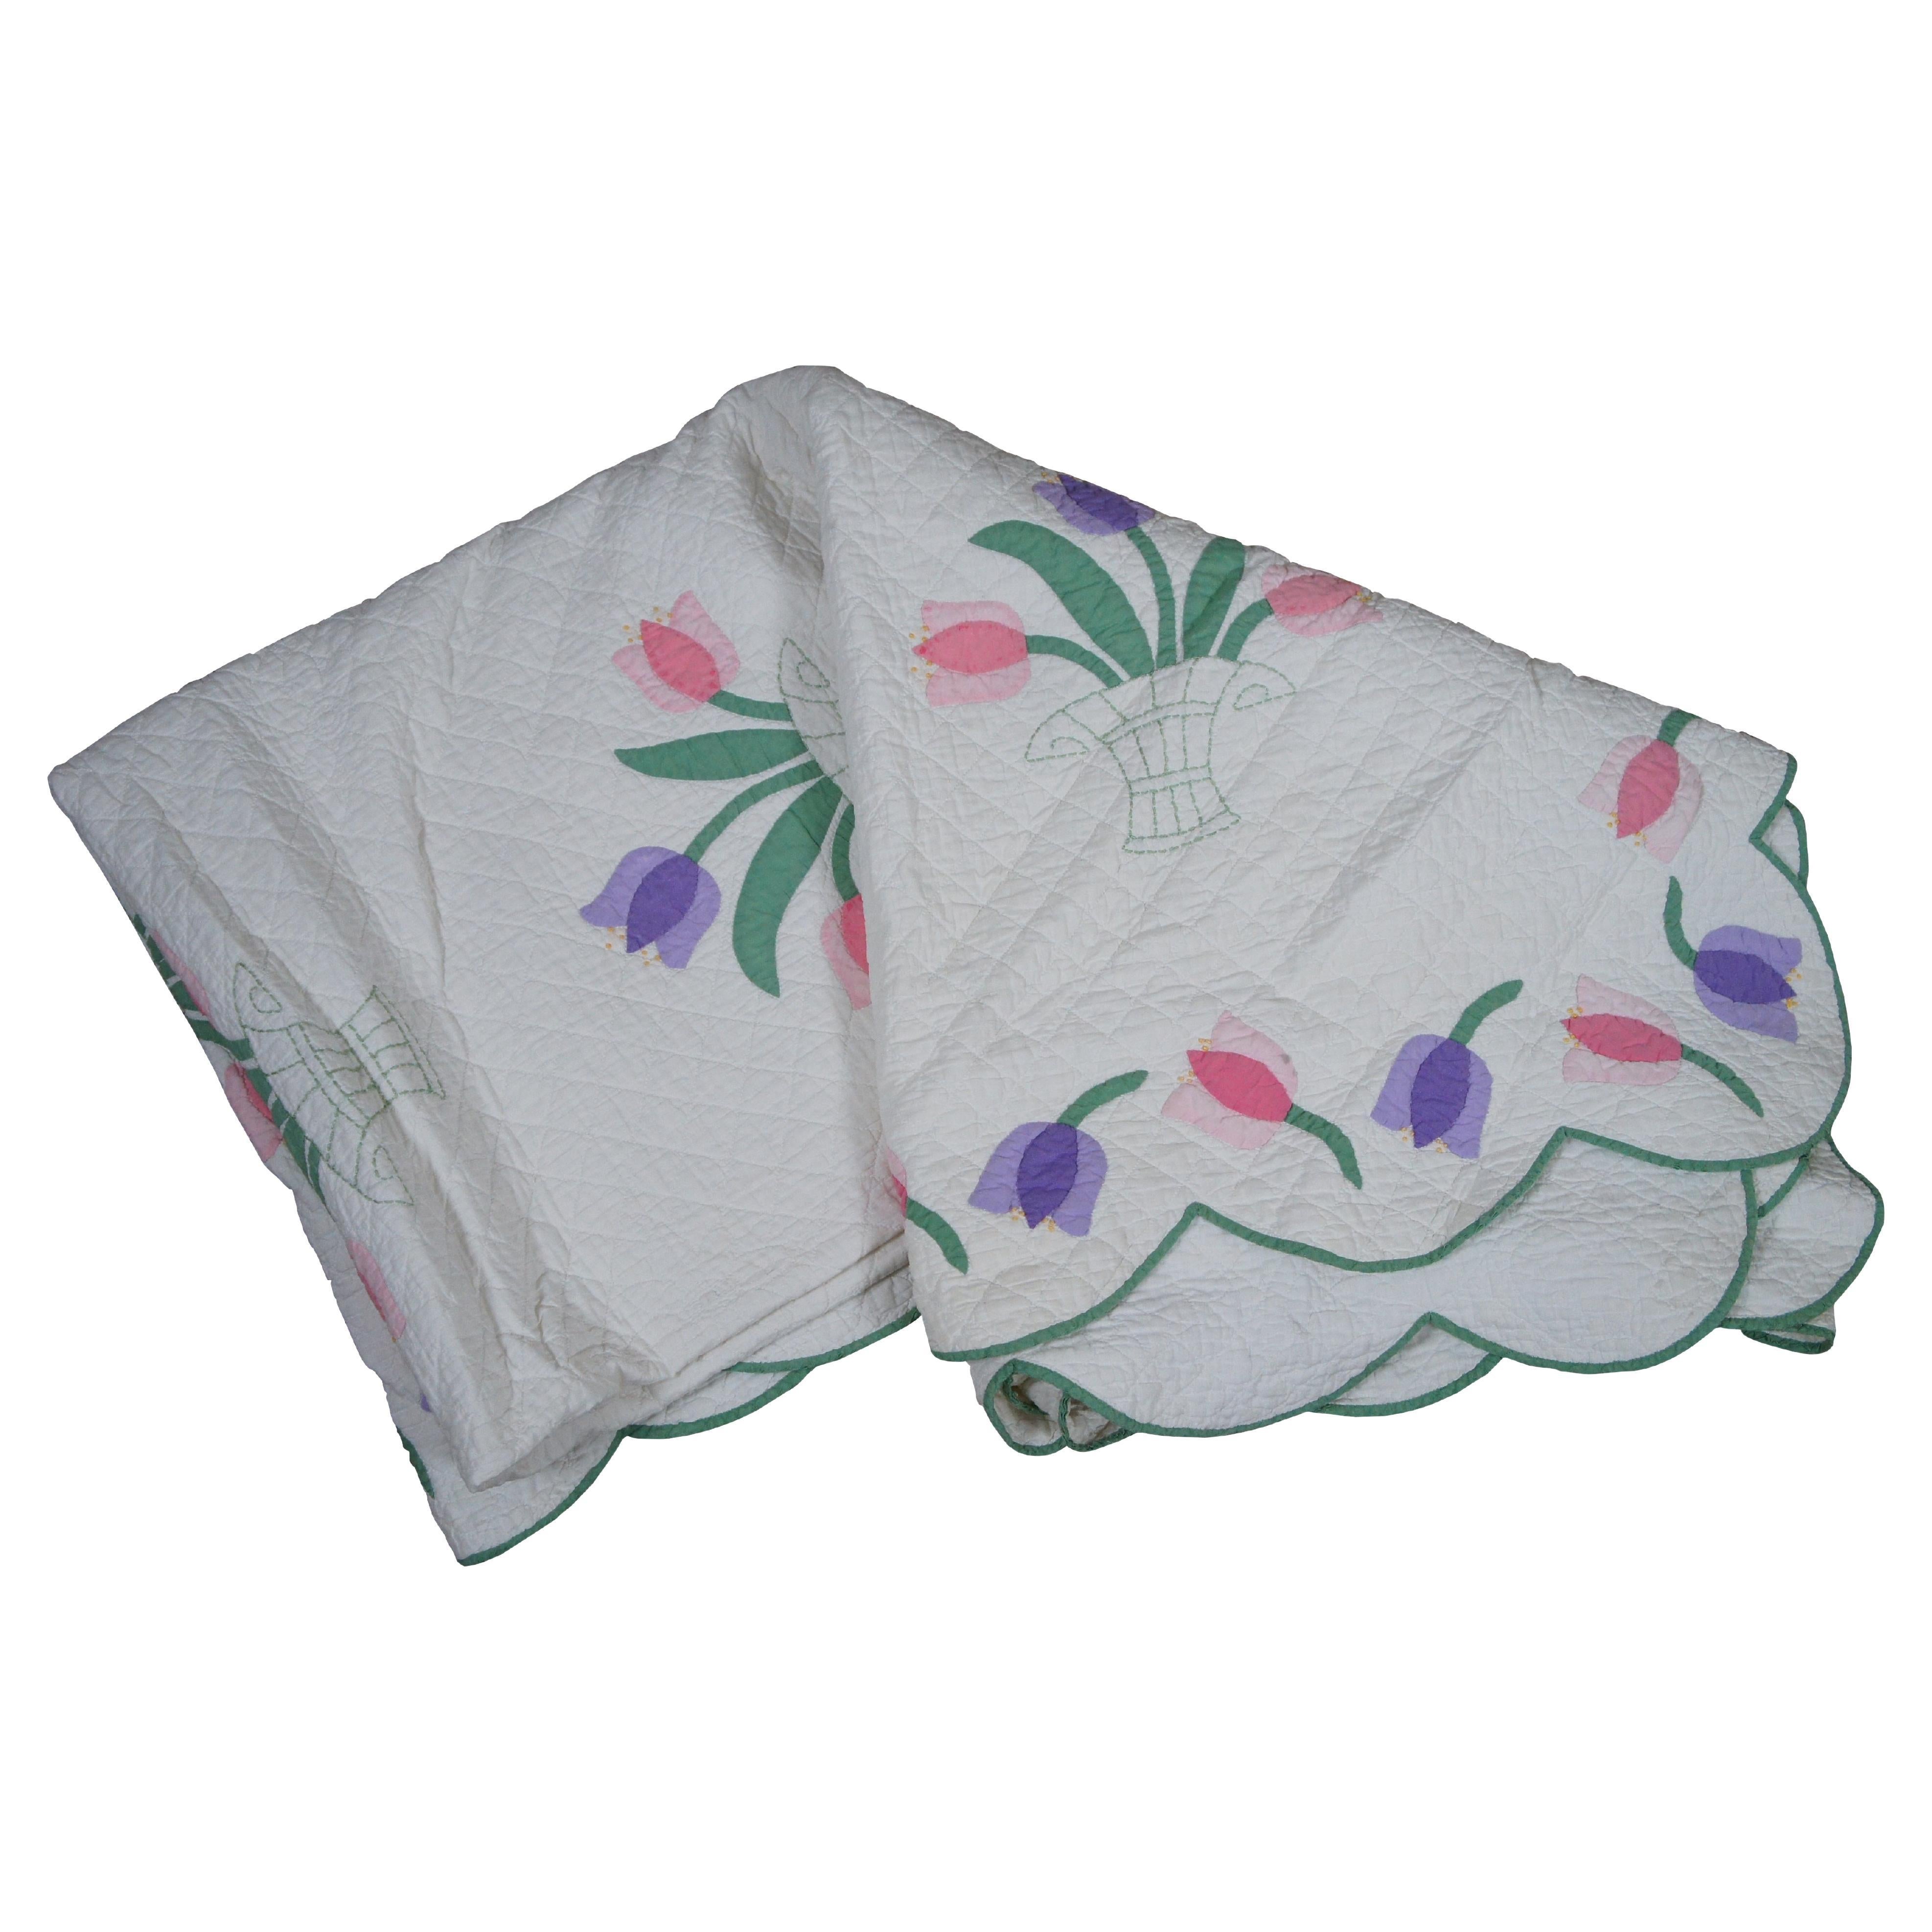 Antique Folk Art Stitched Tulip Flower Baskets Applique Quilt Blanket